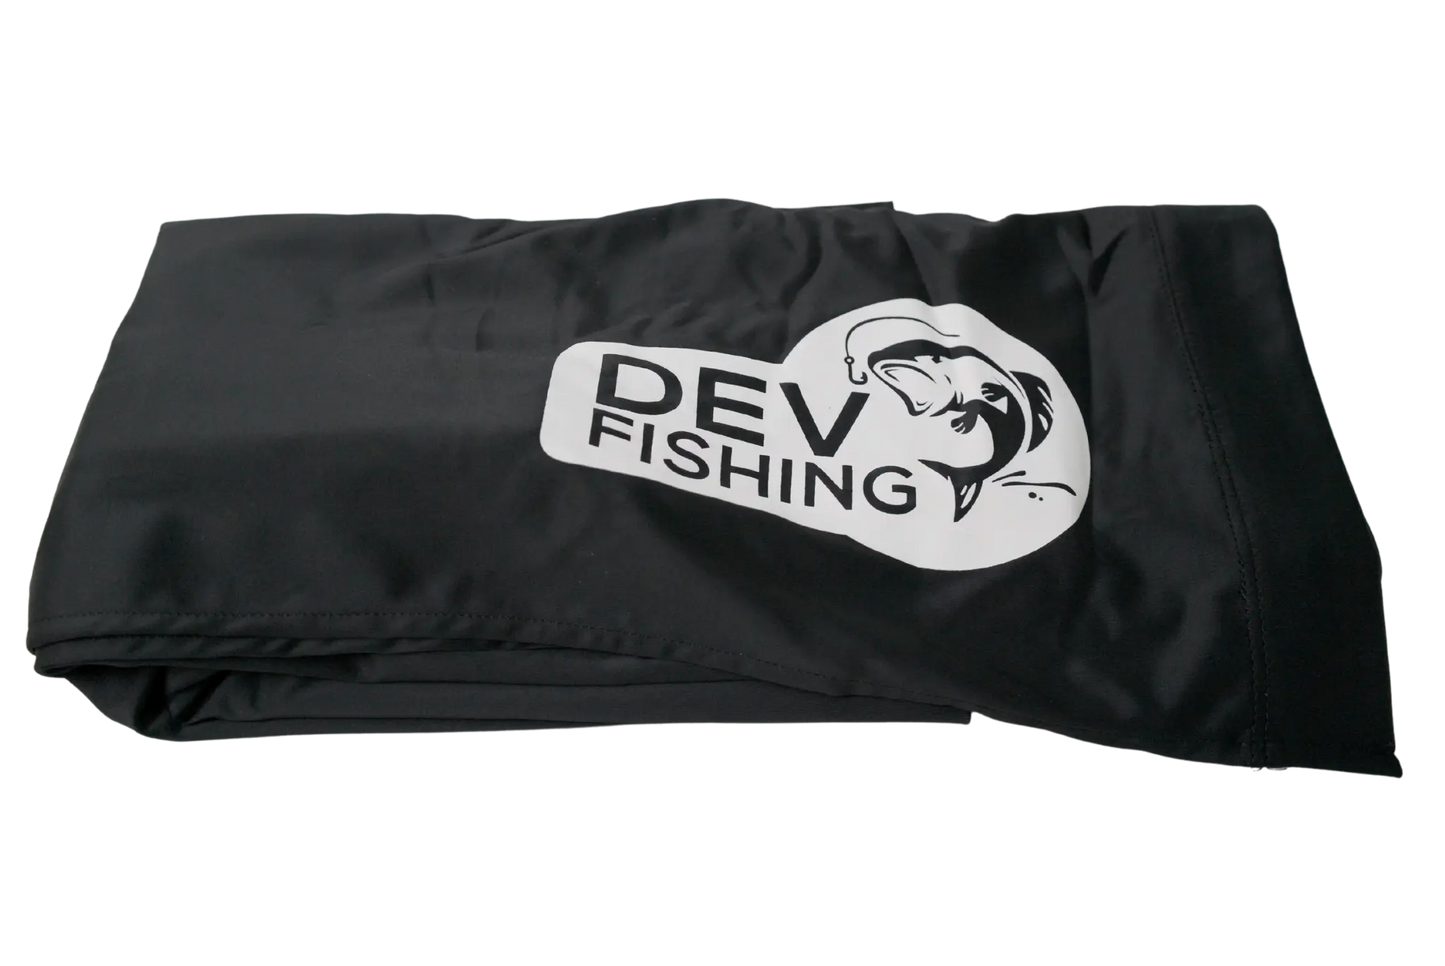 Dev Fishing Fabric Boat Shade Canopy Top Cover (Black) - DevFishing